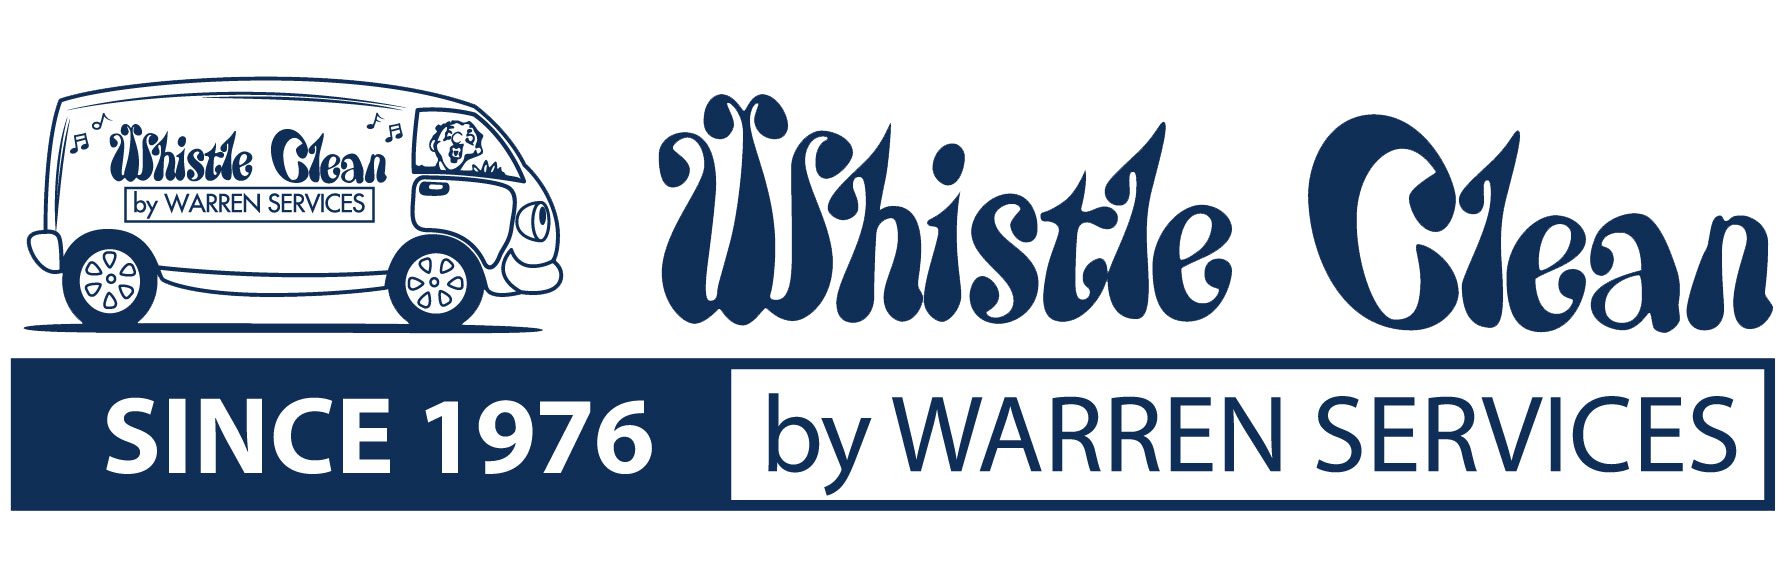 Whistle Clean Logo